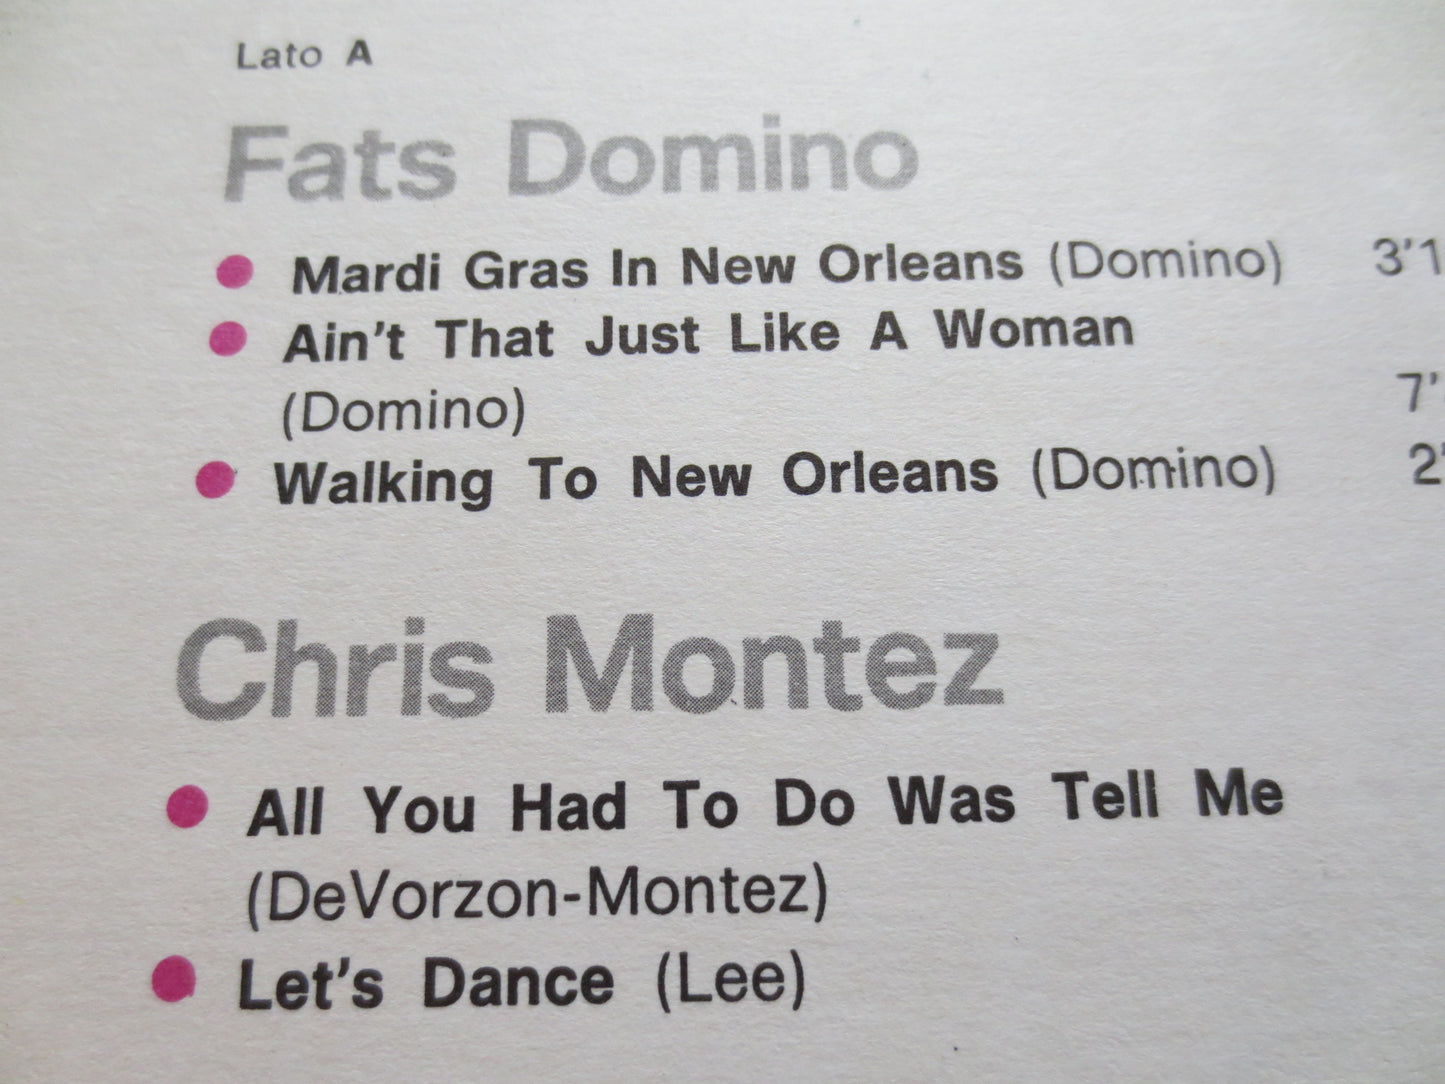 La Grande Storia Del Rock, FATS DOMINO Album, SHOCKING Blue Album, Chris Montez Album, El Dorados Album, Lps, 1981 Records